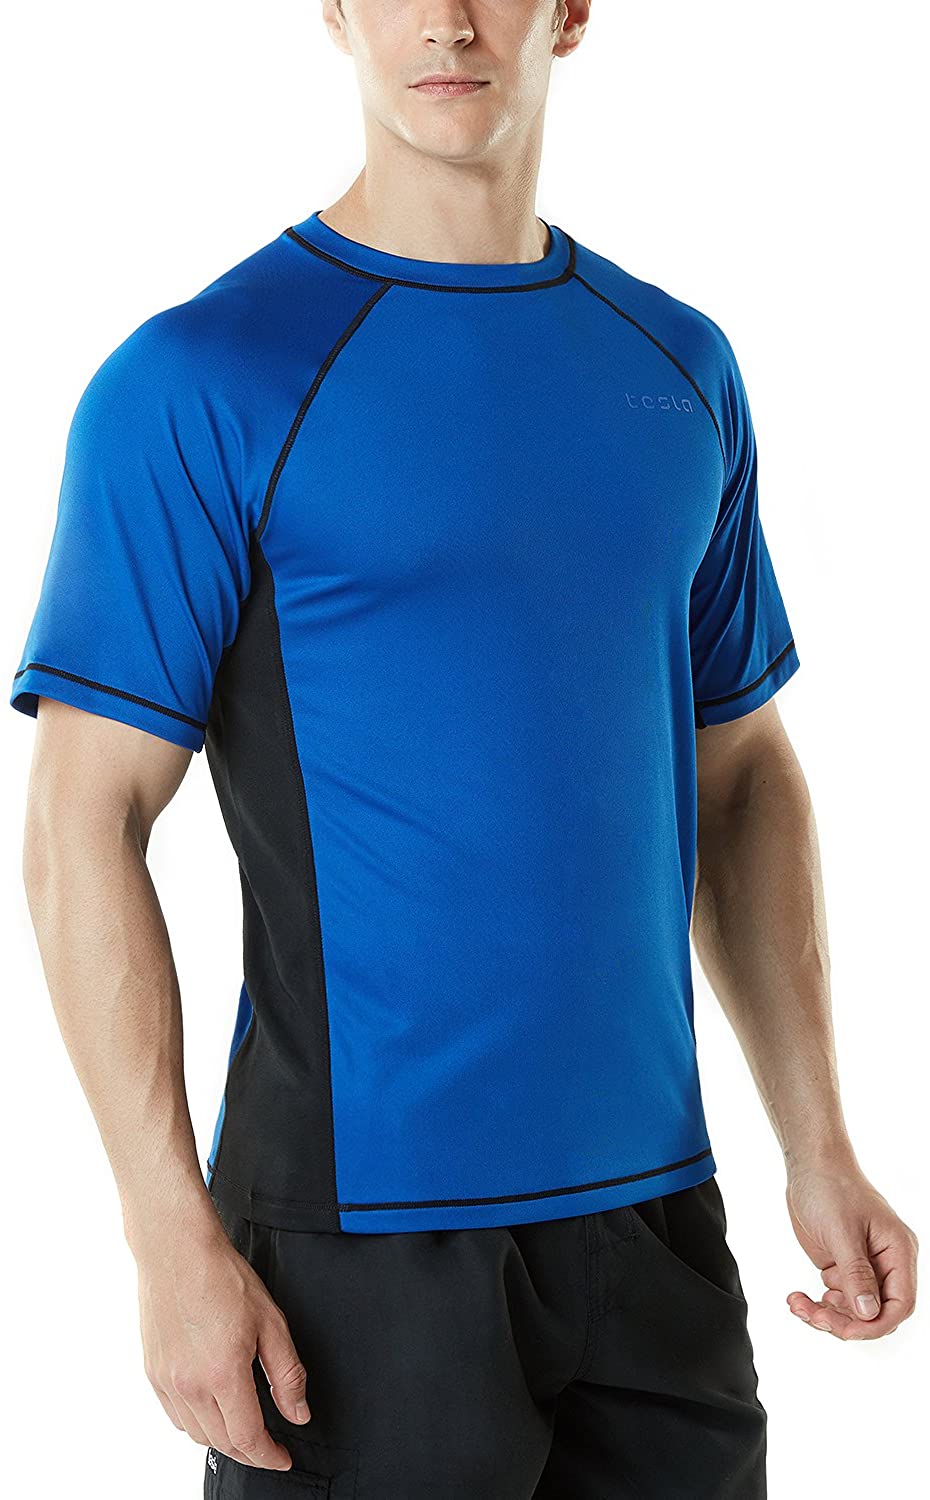 UPF 50 TSLA 1 or 2 Pack Mens Rashguard Swim Shirts Loose-Fit Short Sleeve Shirt UV Cool Dry fit Athletic Water Shirts 